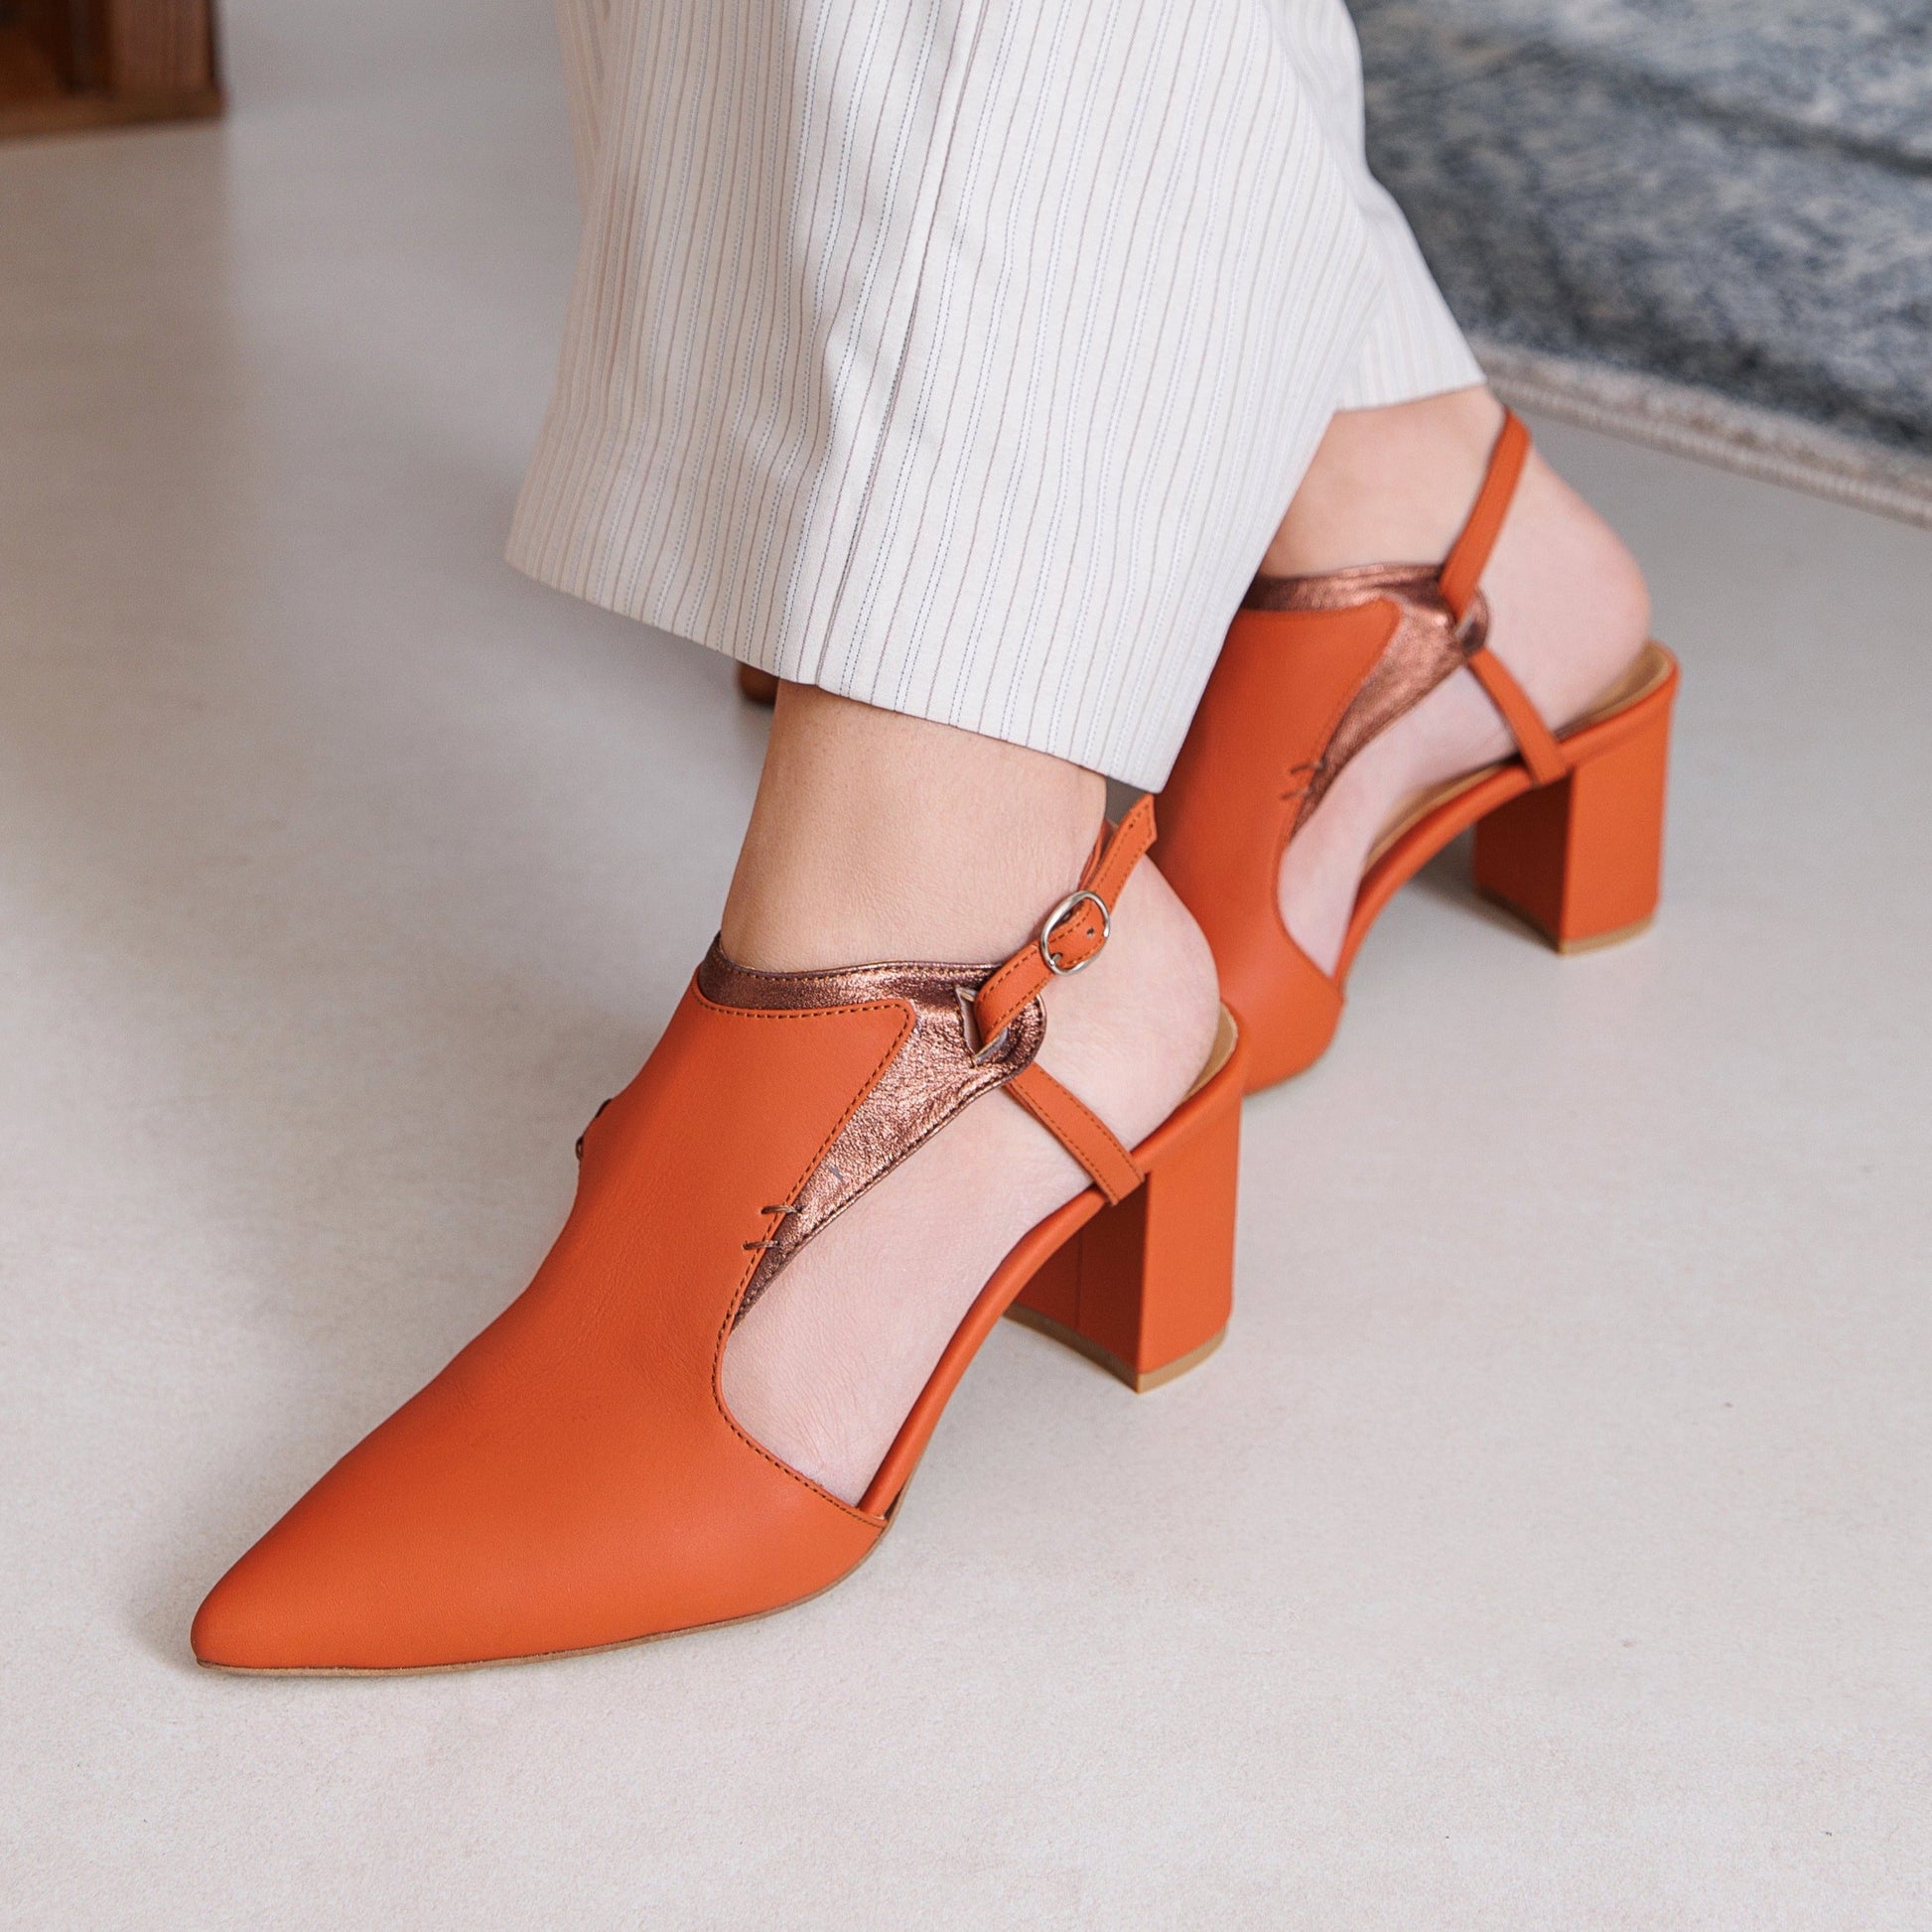 Kadi terracotta heel - Heels - kuwait - Ksa- shoes